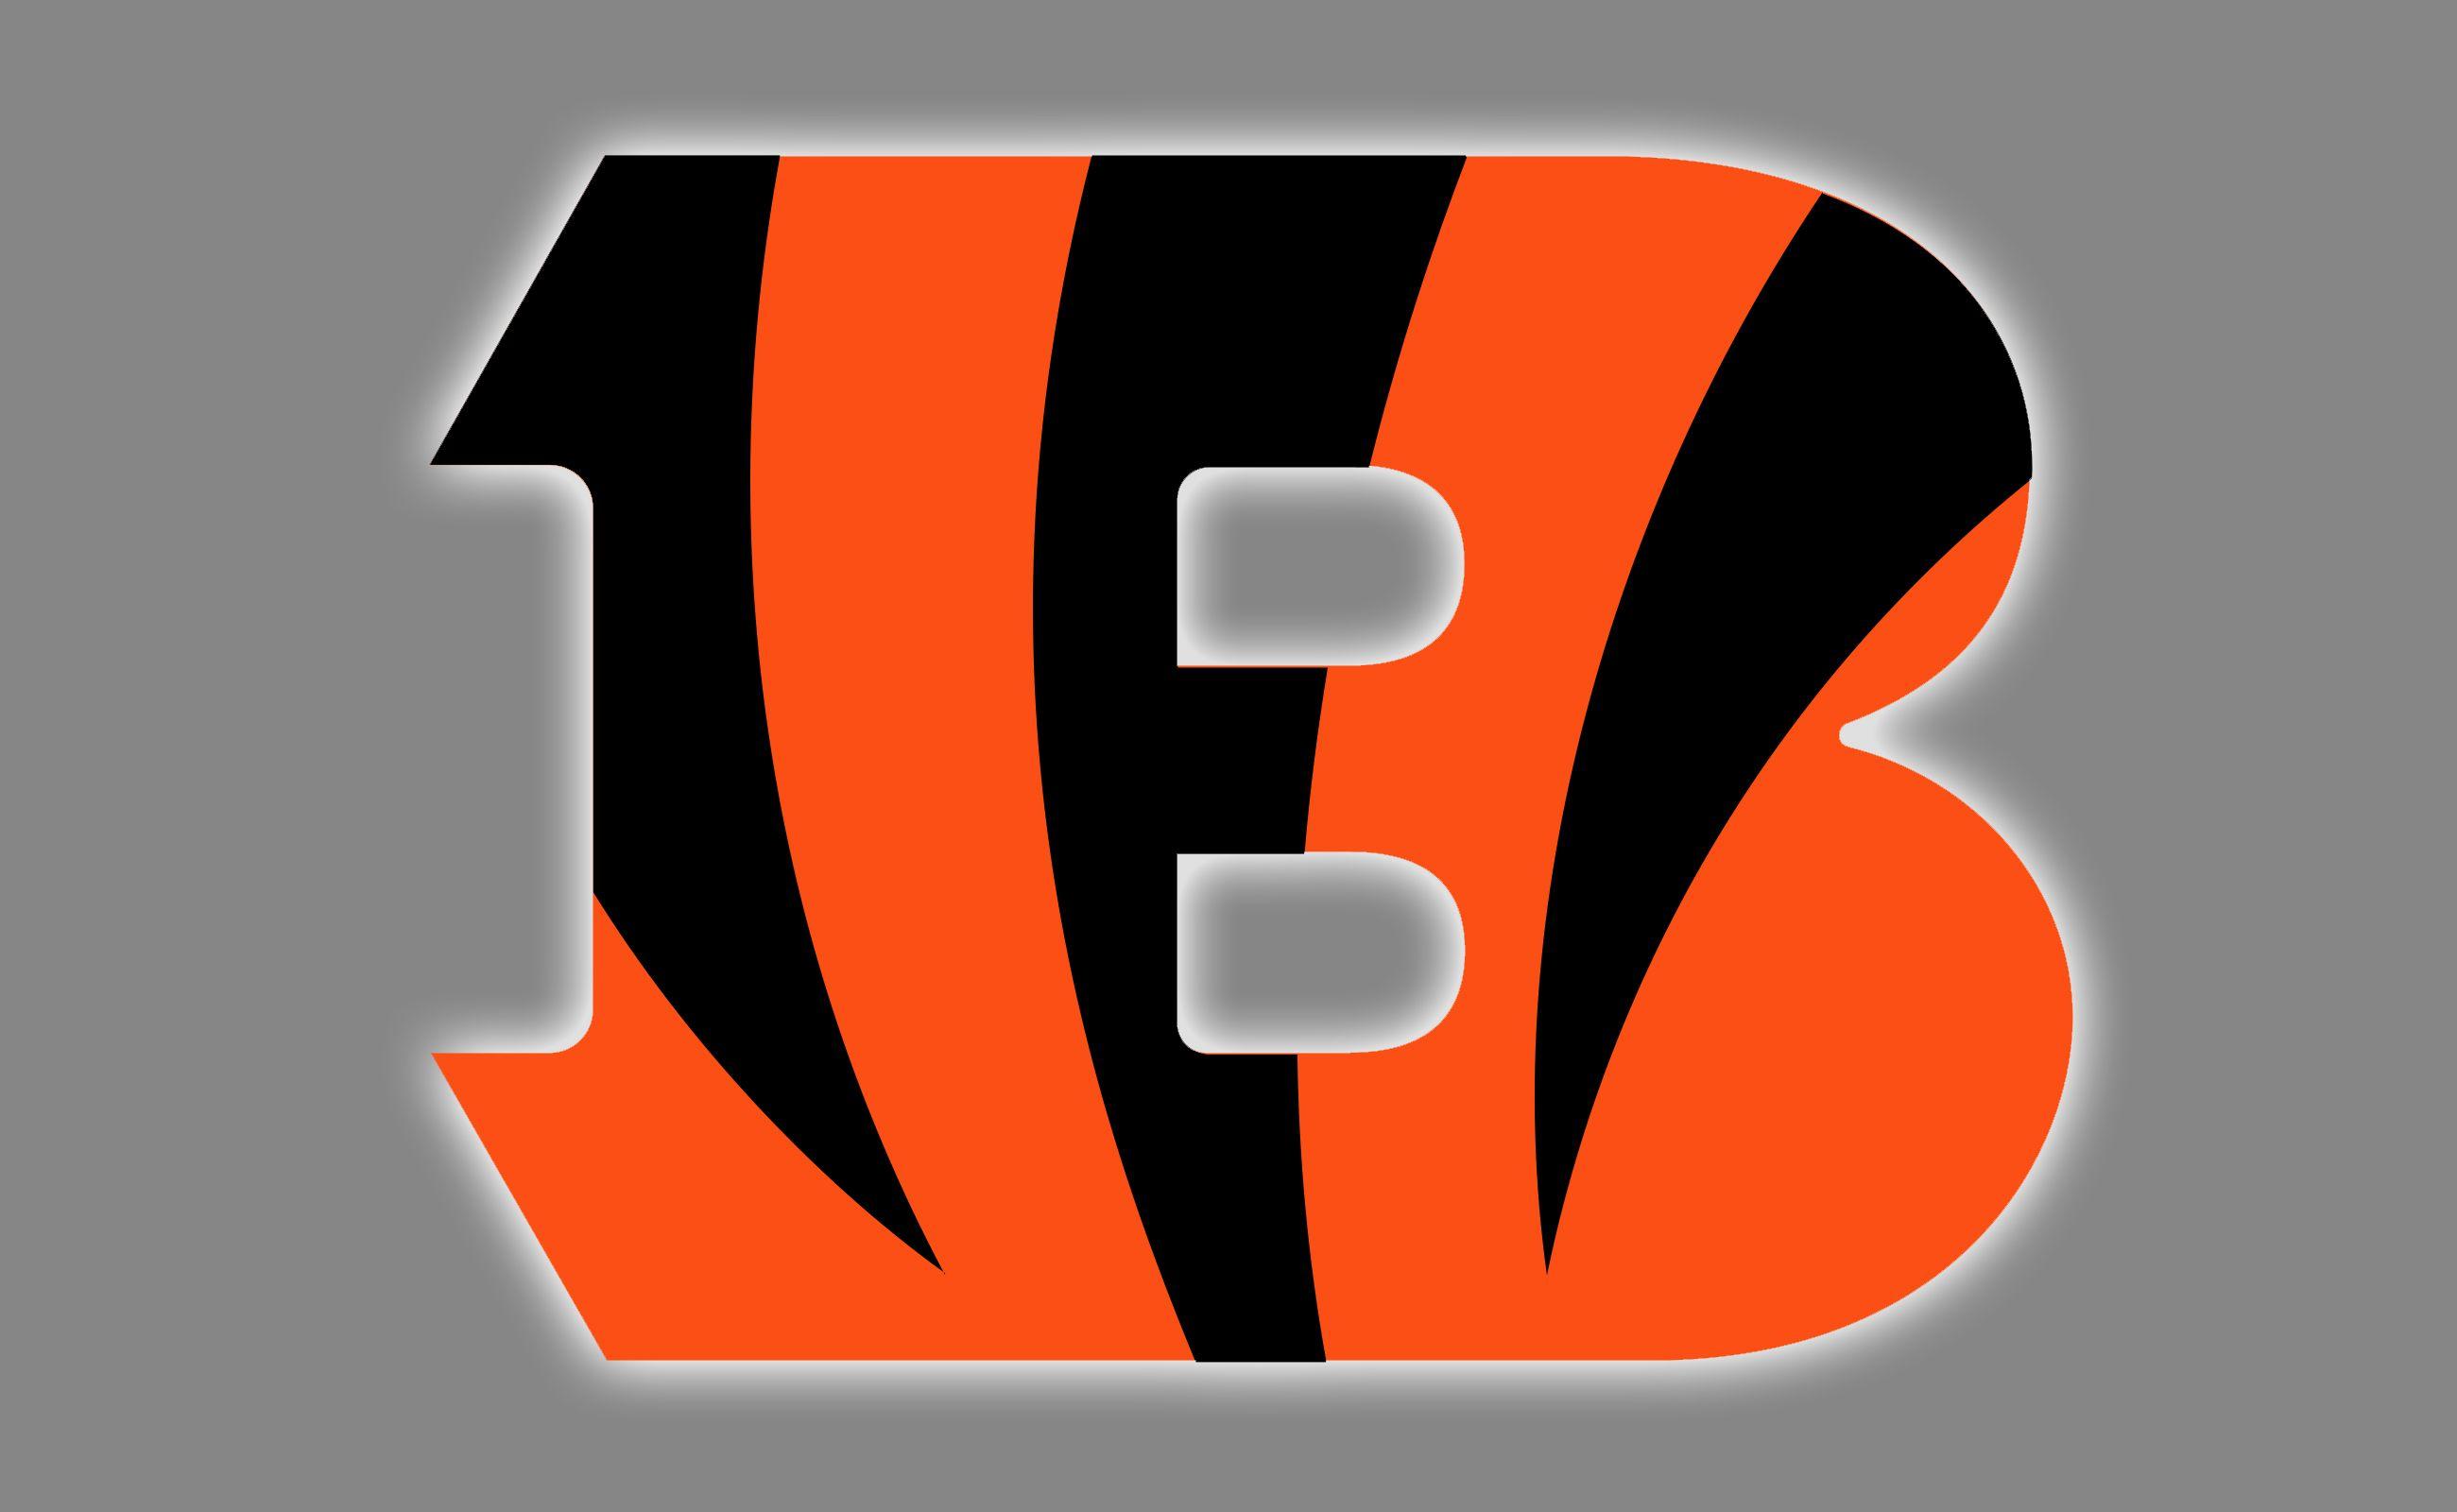 What Has a Orange B Logo - Cincinnati Bengals Logo, Bengals Symbol, Meaning, History and Evolution